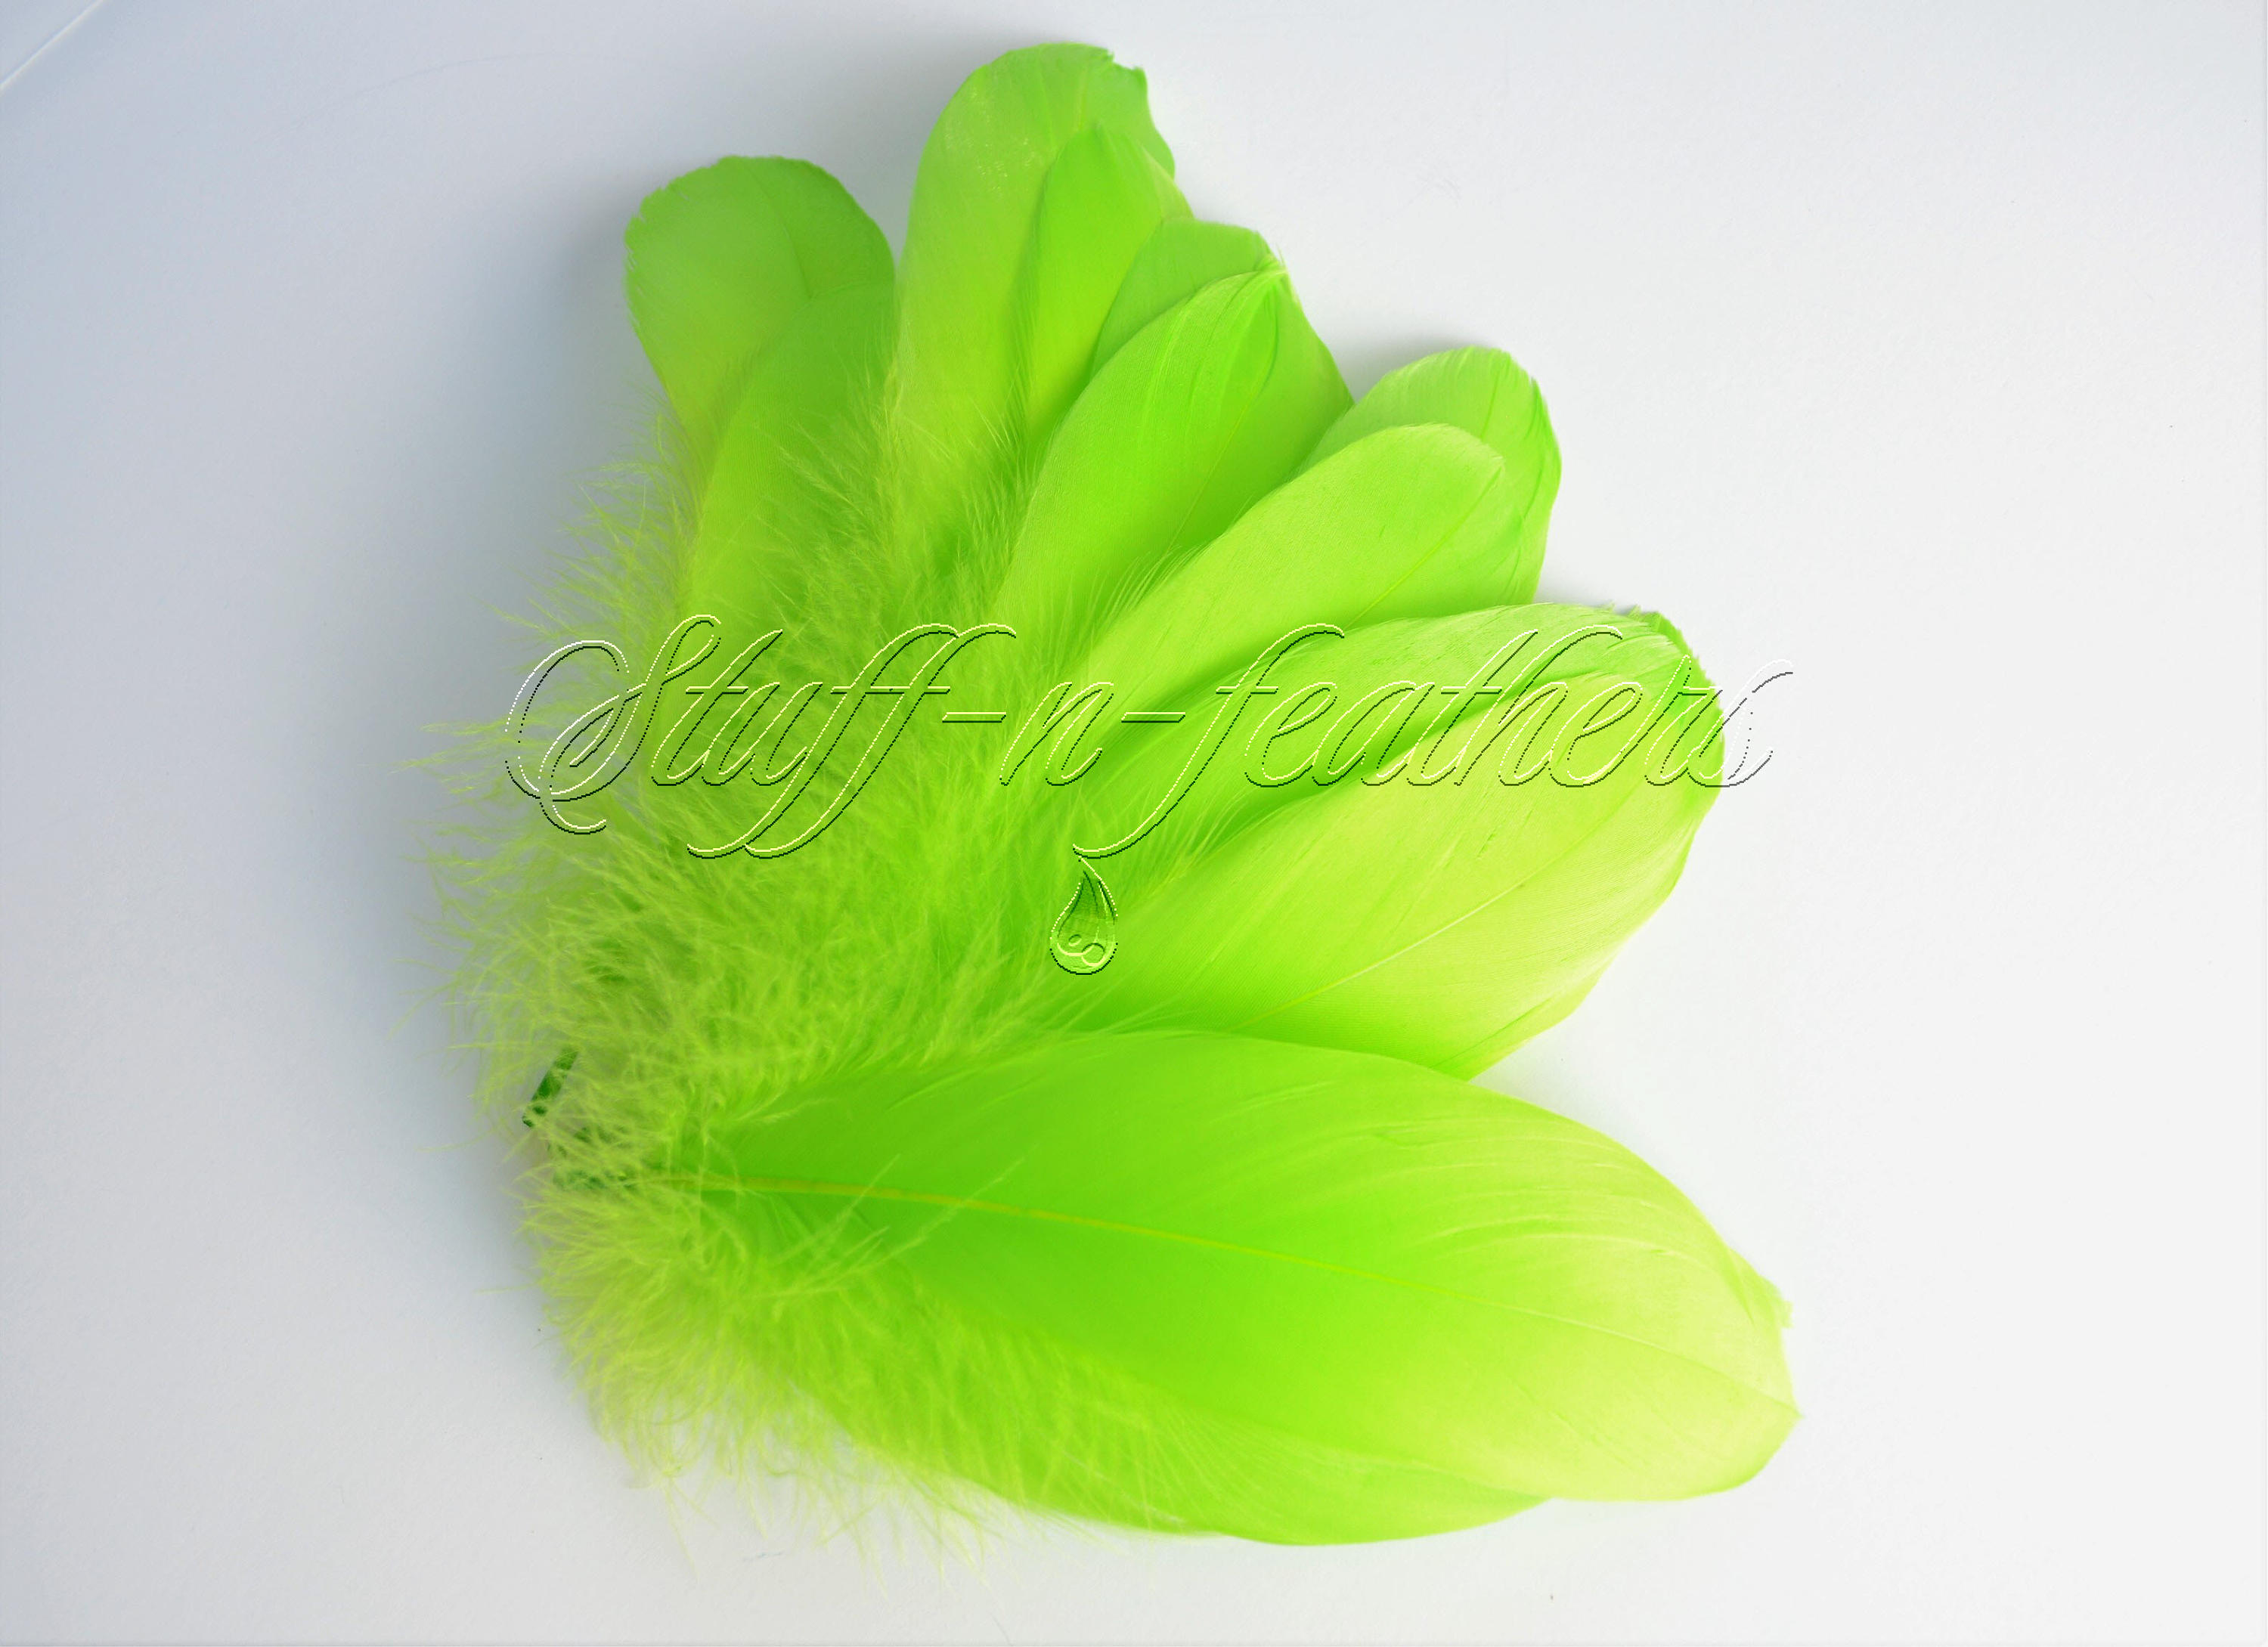 Goose Satinette Feathers, 4-6 Green Grass Mix Loose Goose Feathers,  Assorted Green Feathers, Small Feathers, Art and Craft Supplies ZUCKER® 